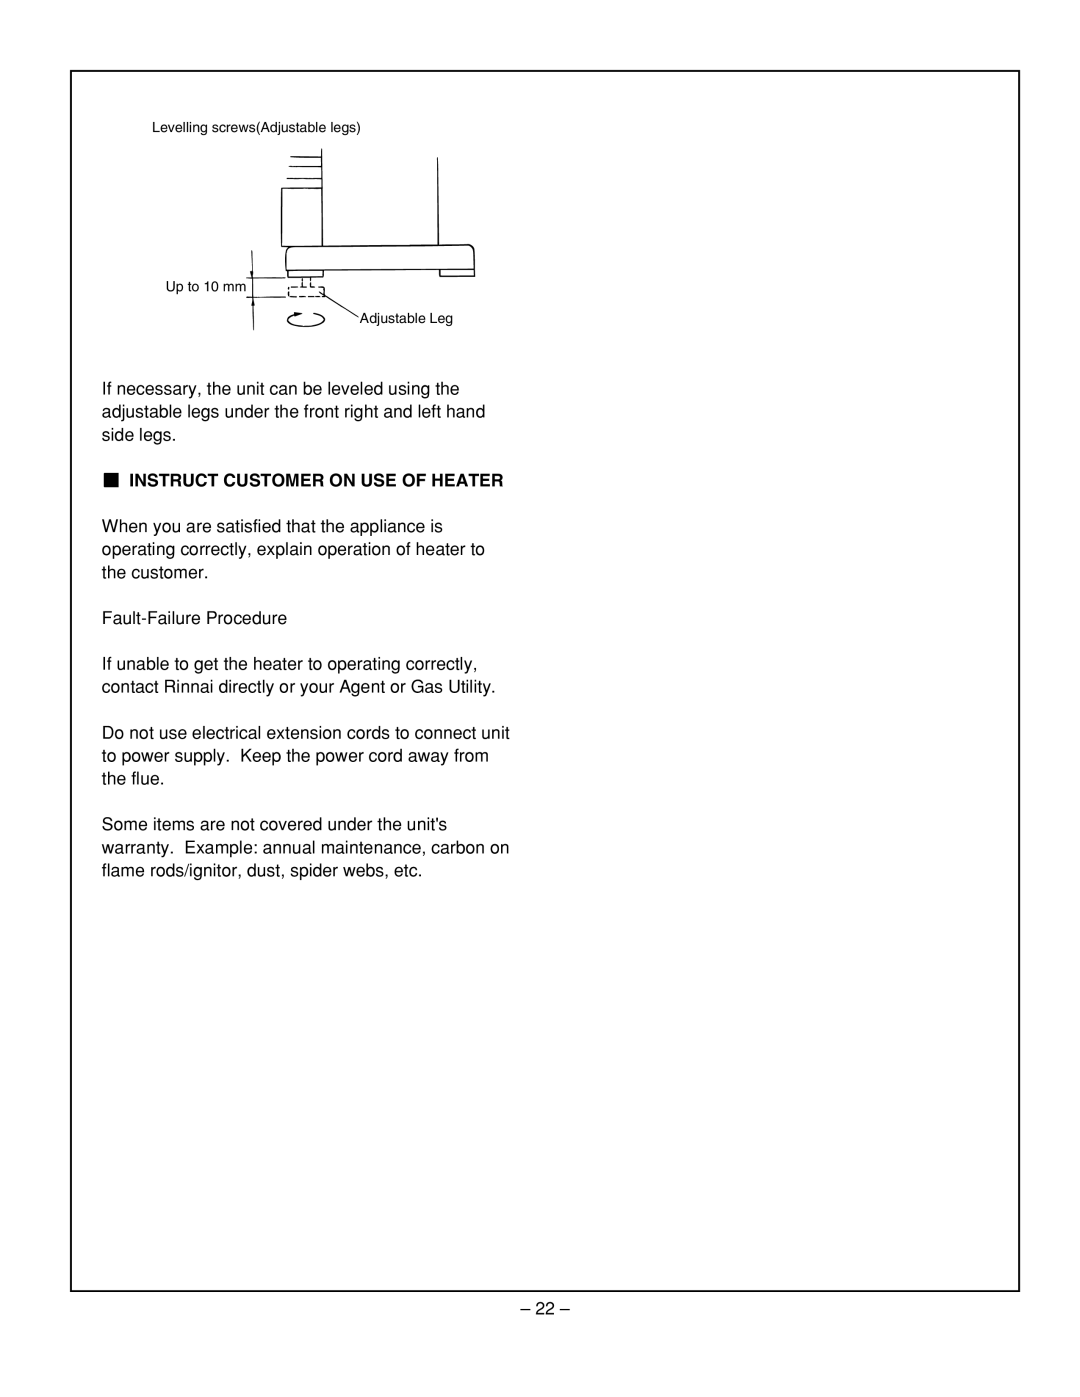 Rinnai RHFE-431WTA installation manual Instruct Customer On Use Of Heater 